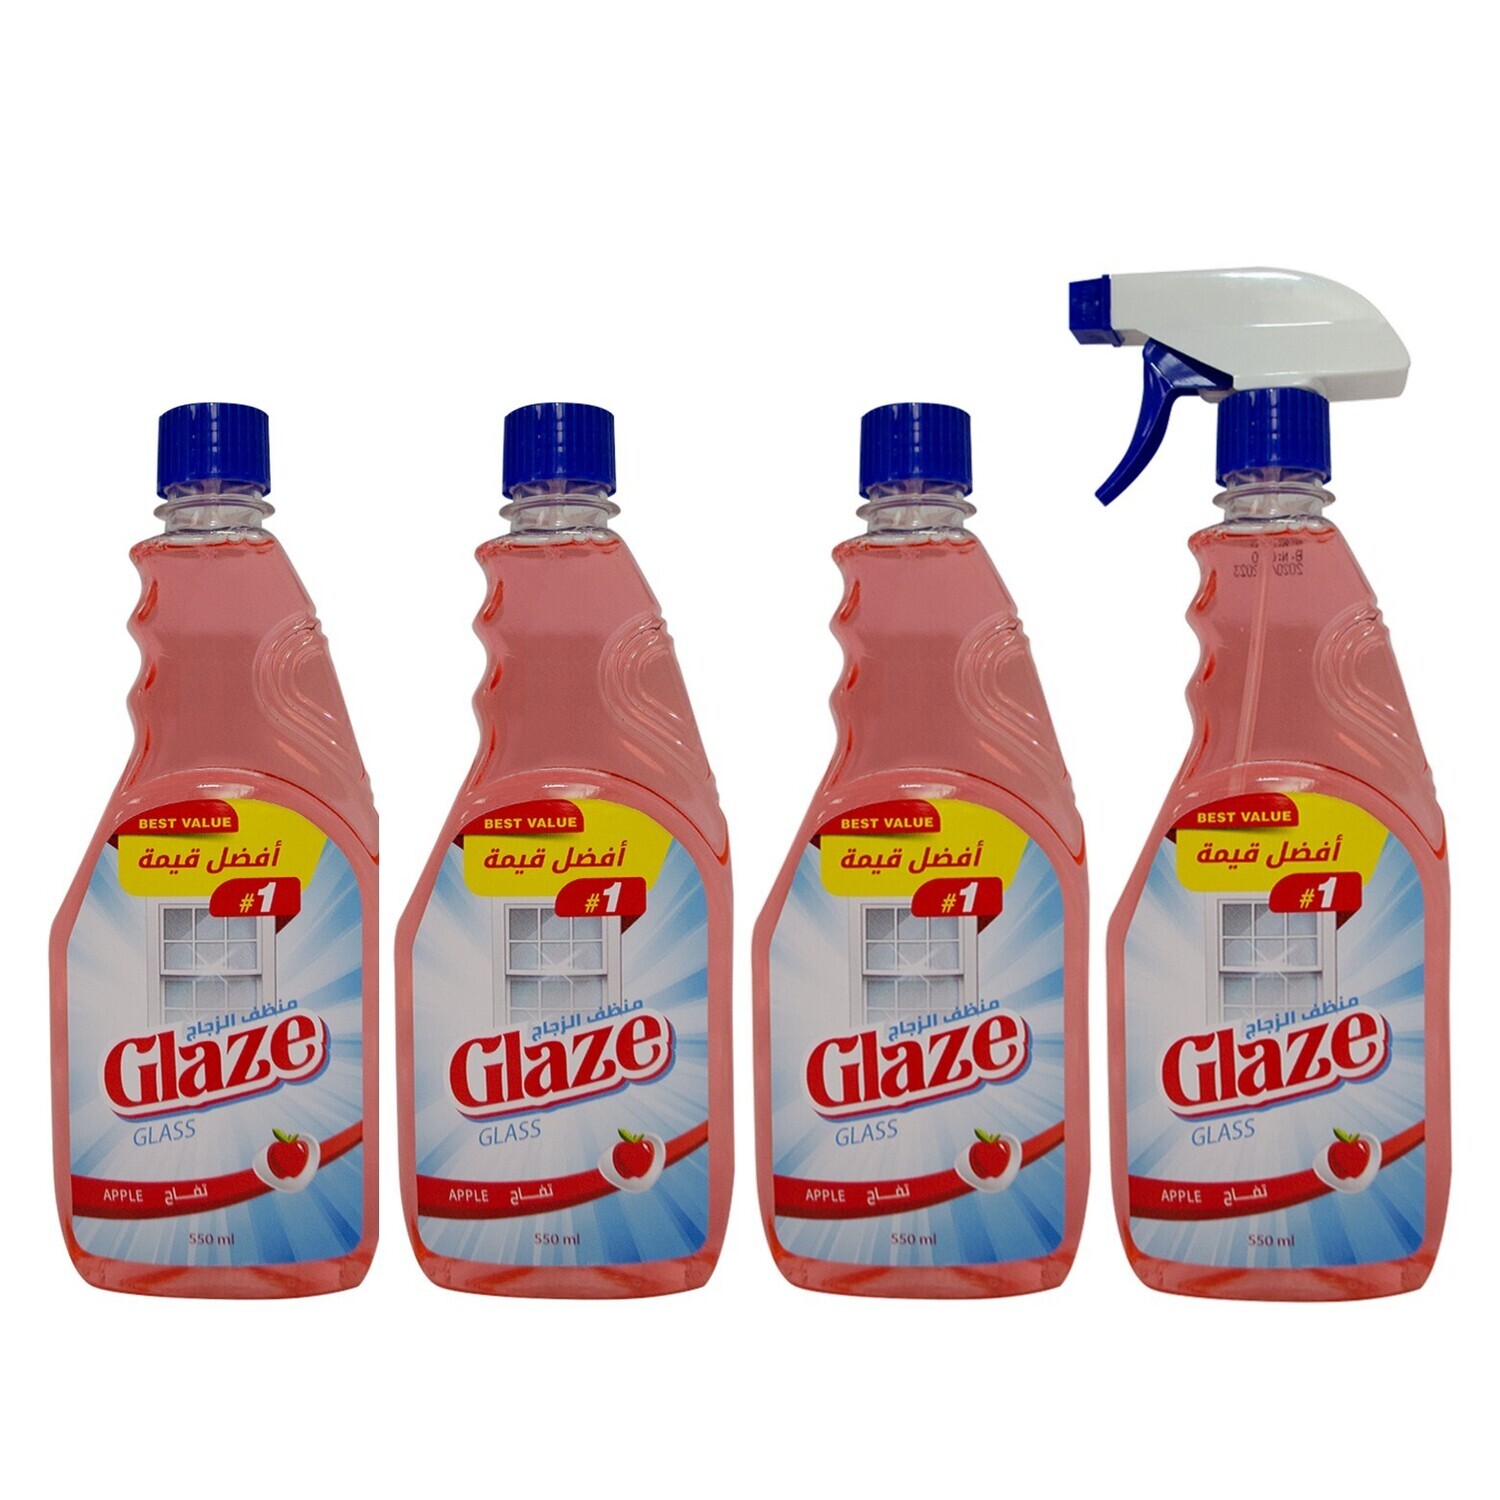 Glaze - Glass Cleaner Apple Scent - Super Value pack of 4